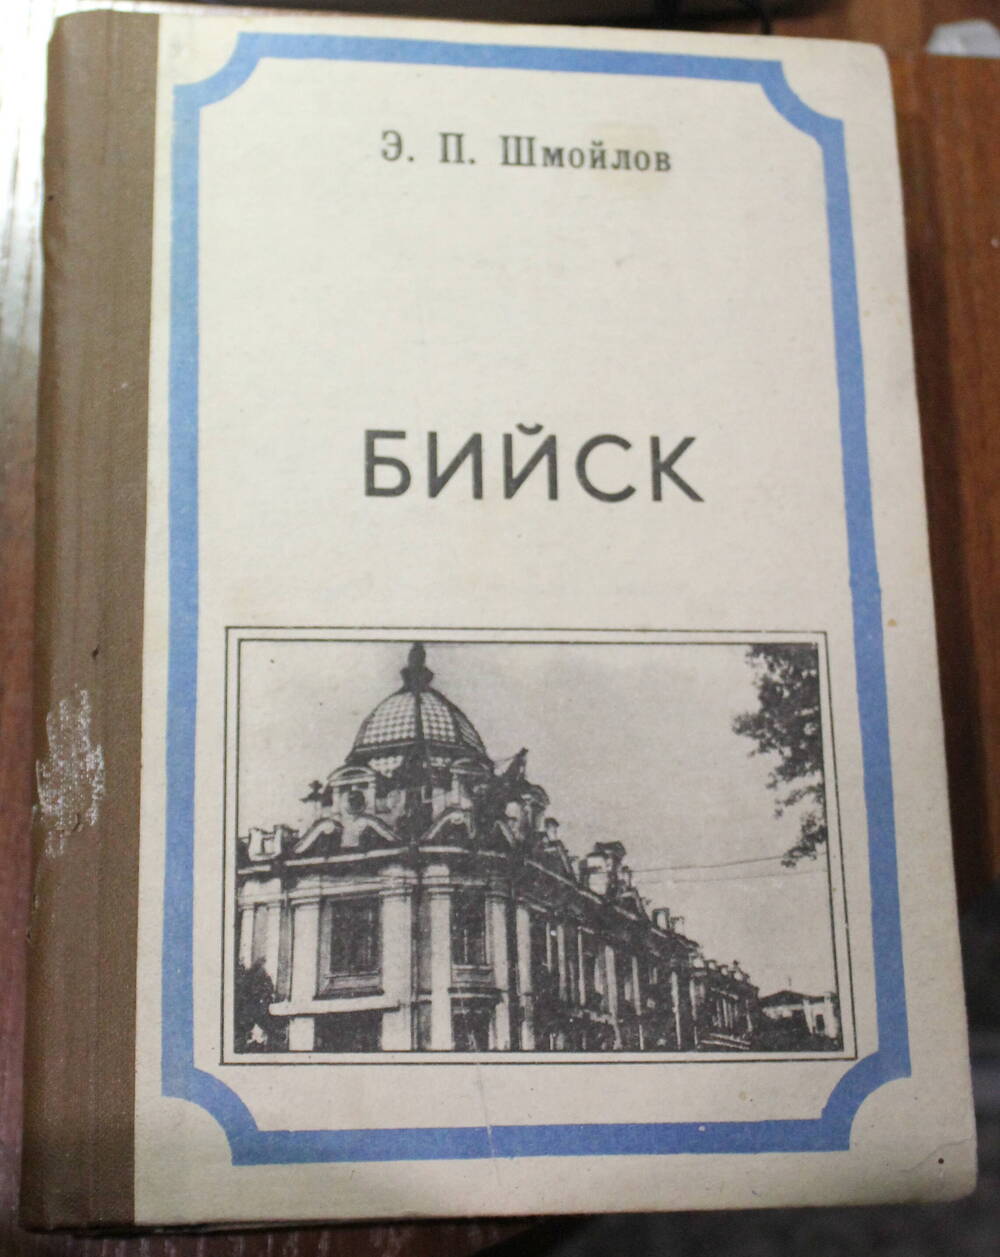 Книга Бийск Э.П. Шмойлов, 1993г.